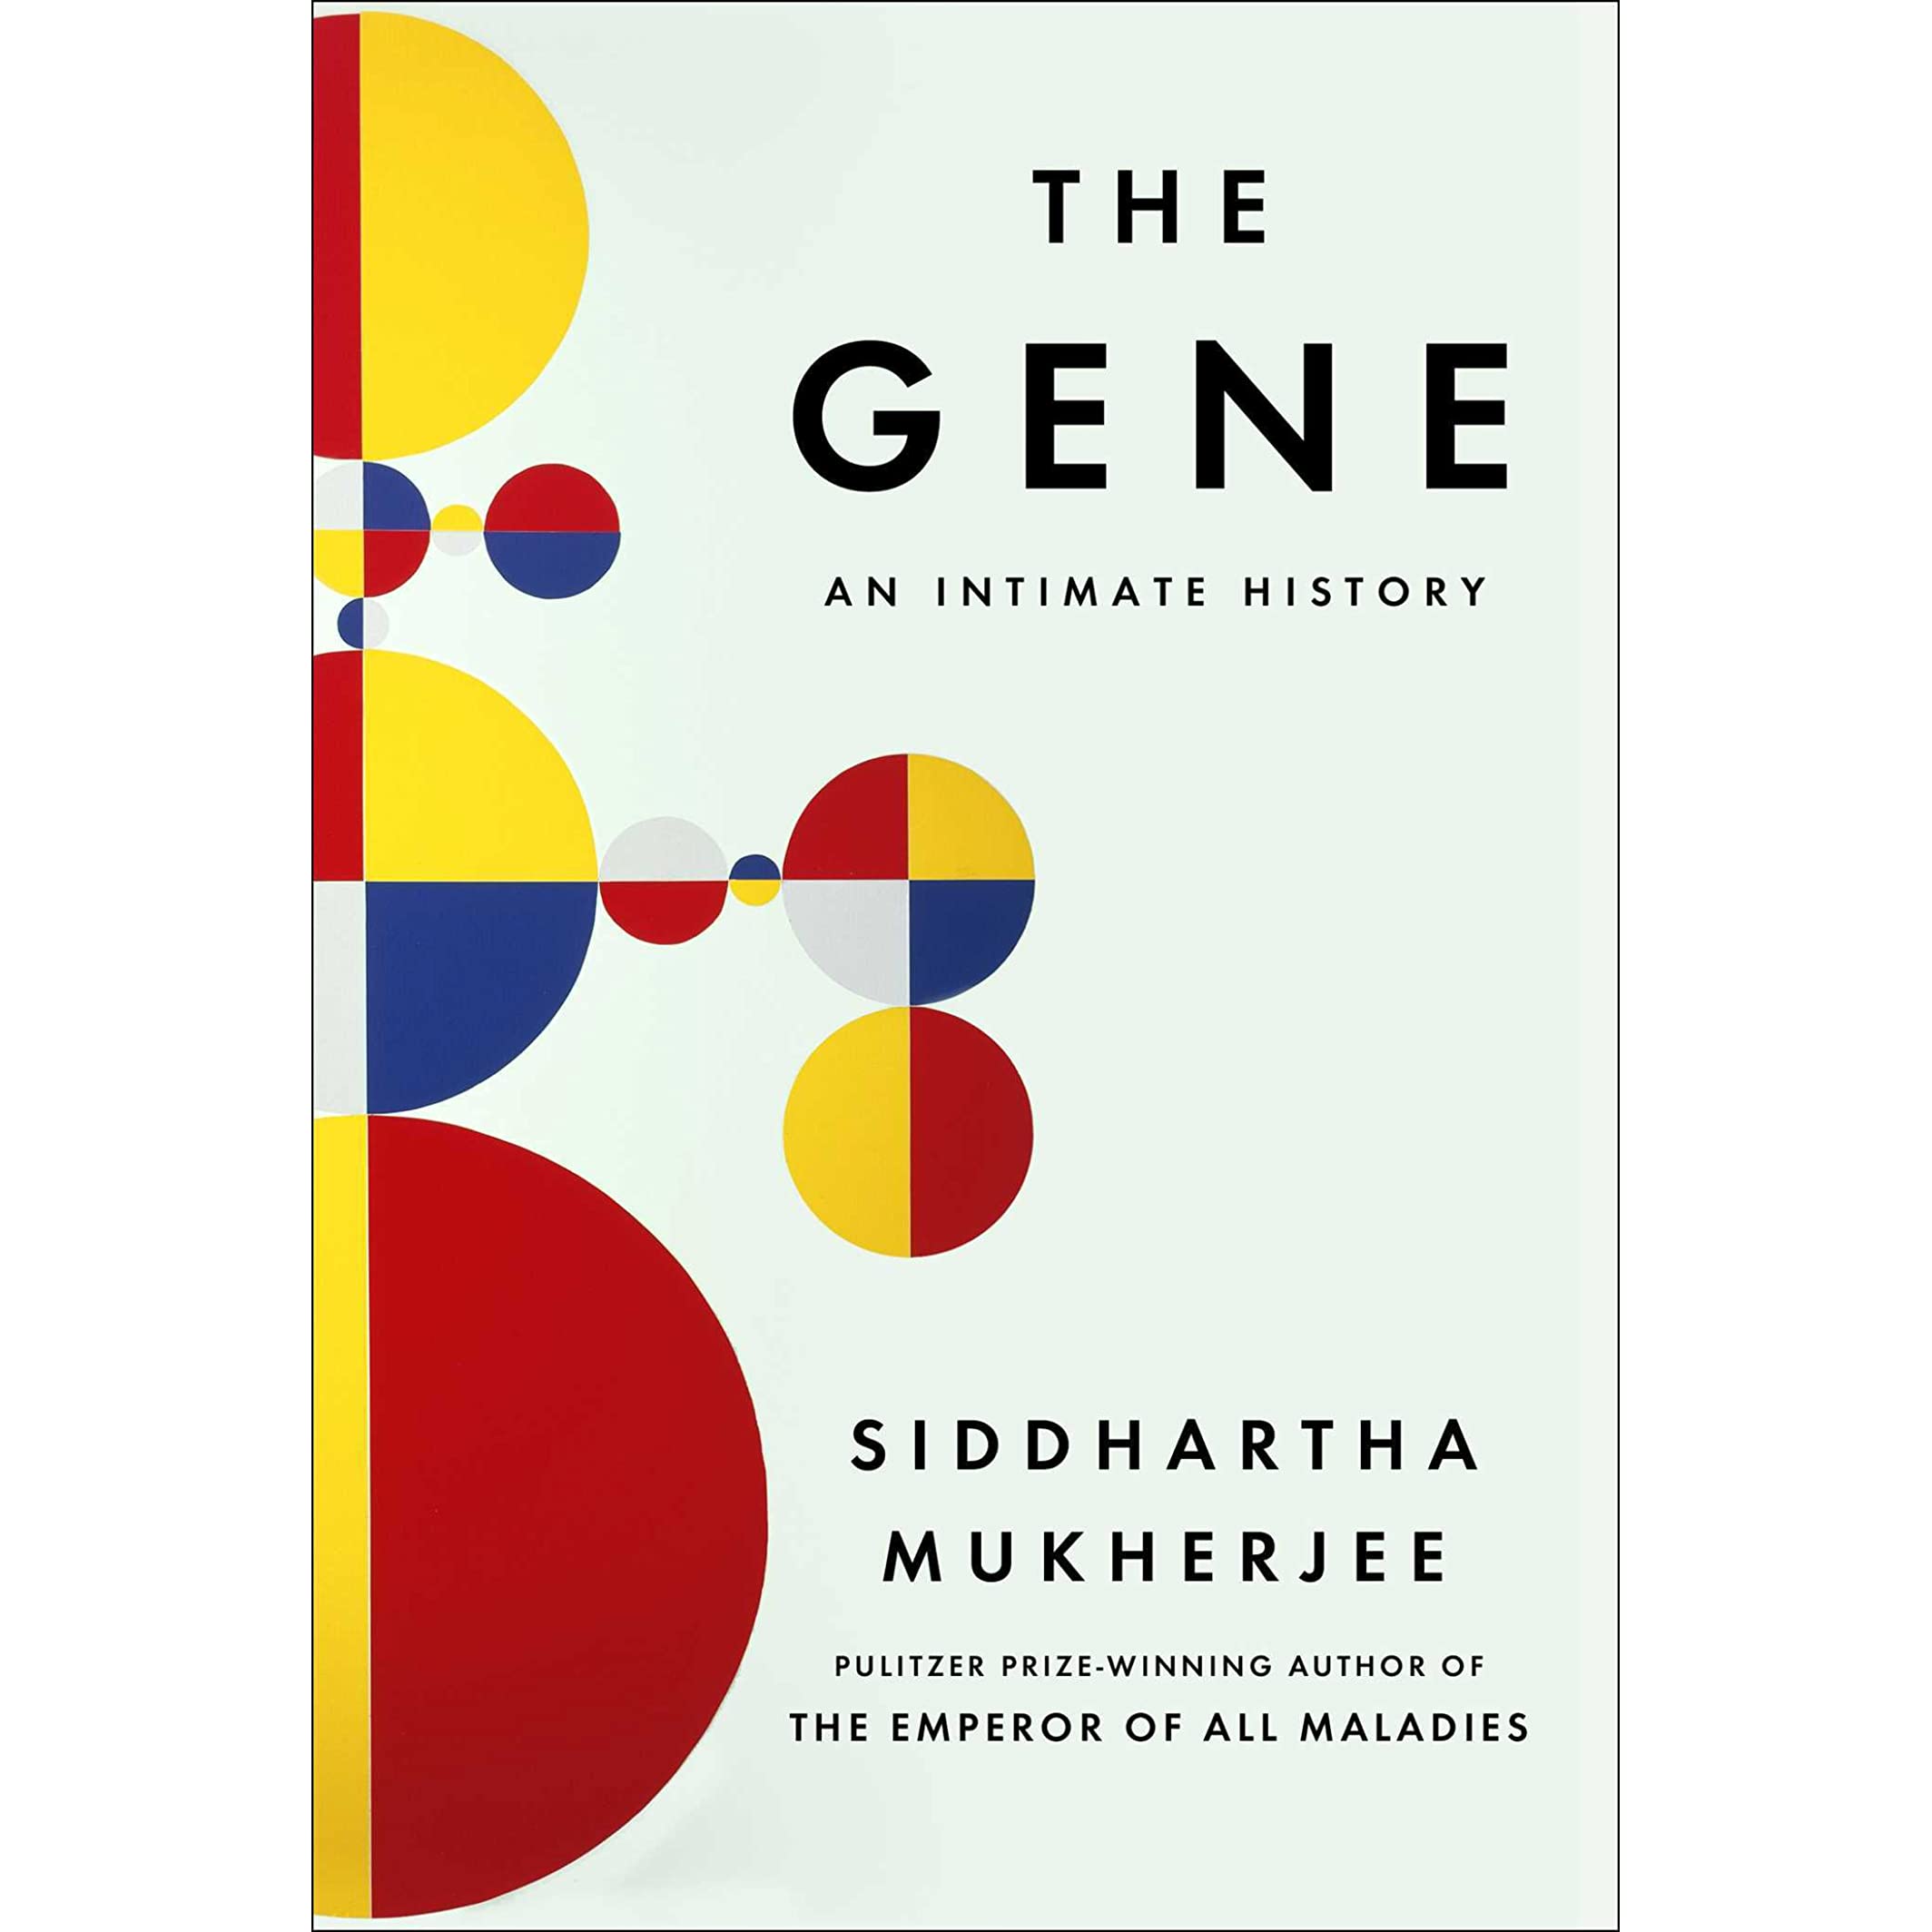 History　PH　The　Mukherjee　Intimate　Lazada　Gene:　Siddhartha　An　by